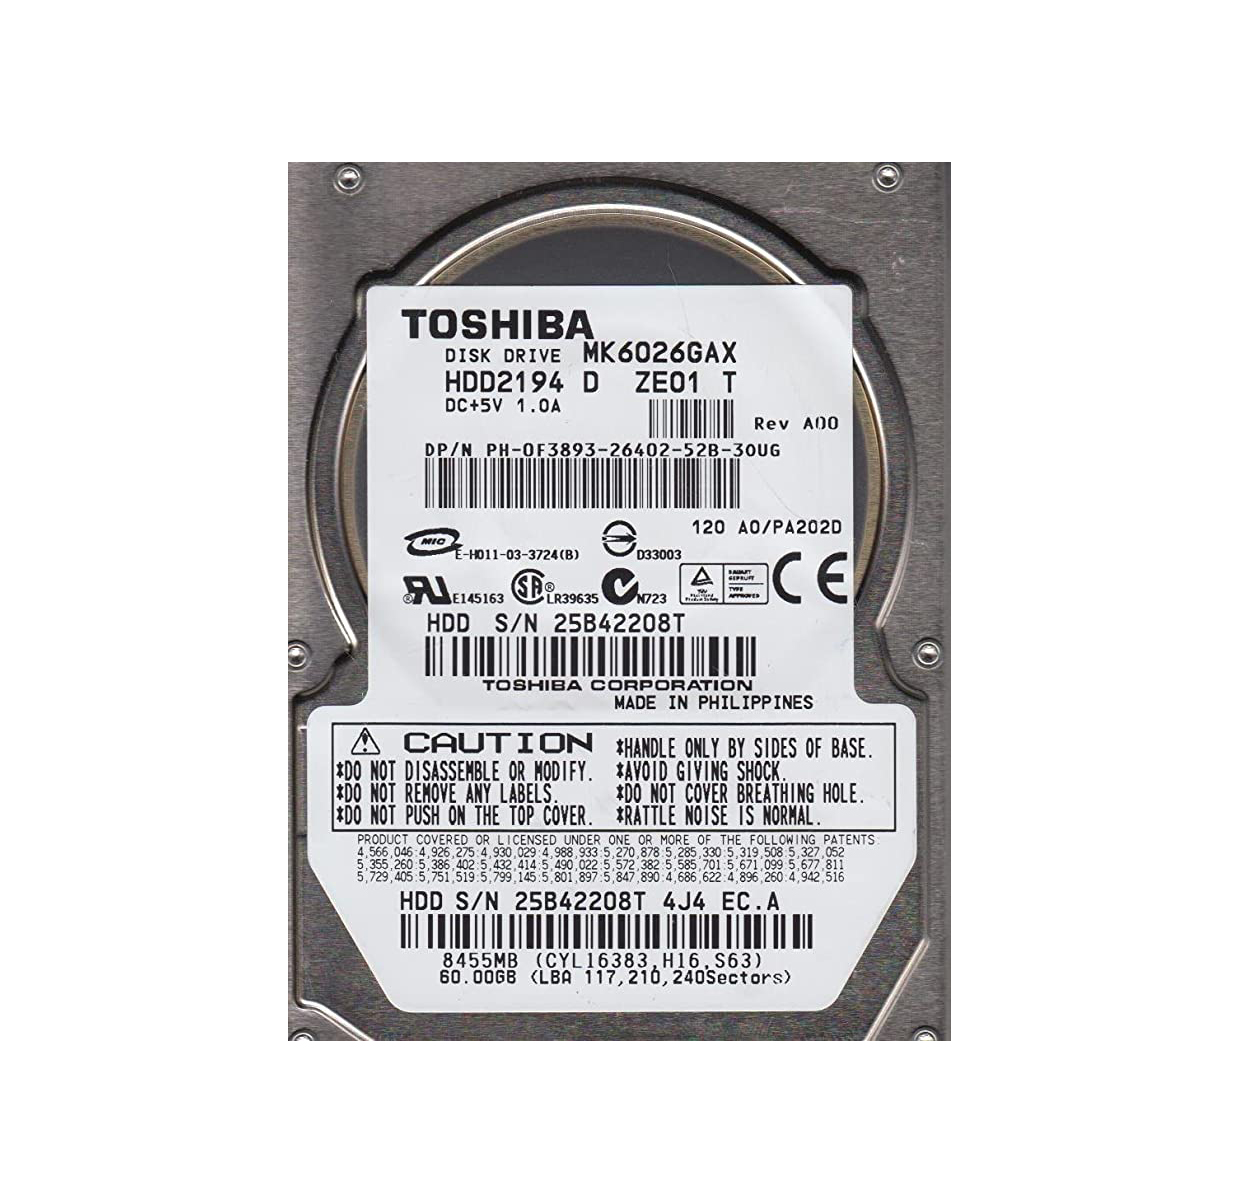 HDD2194 - Toshiba 60GB 5400RPM IDE Ultra ATA/100 (ATA-6